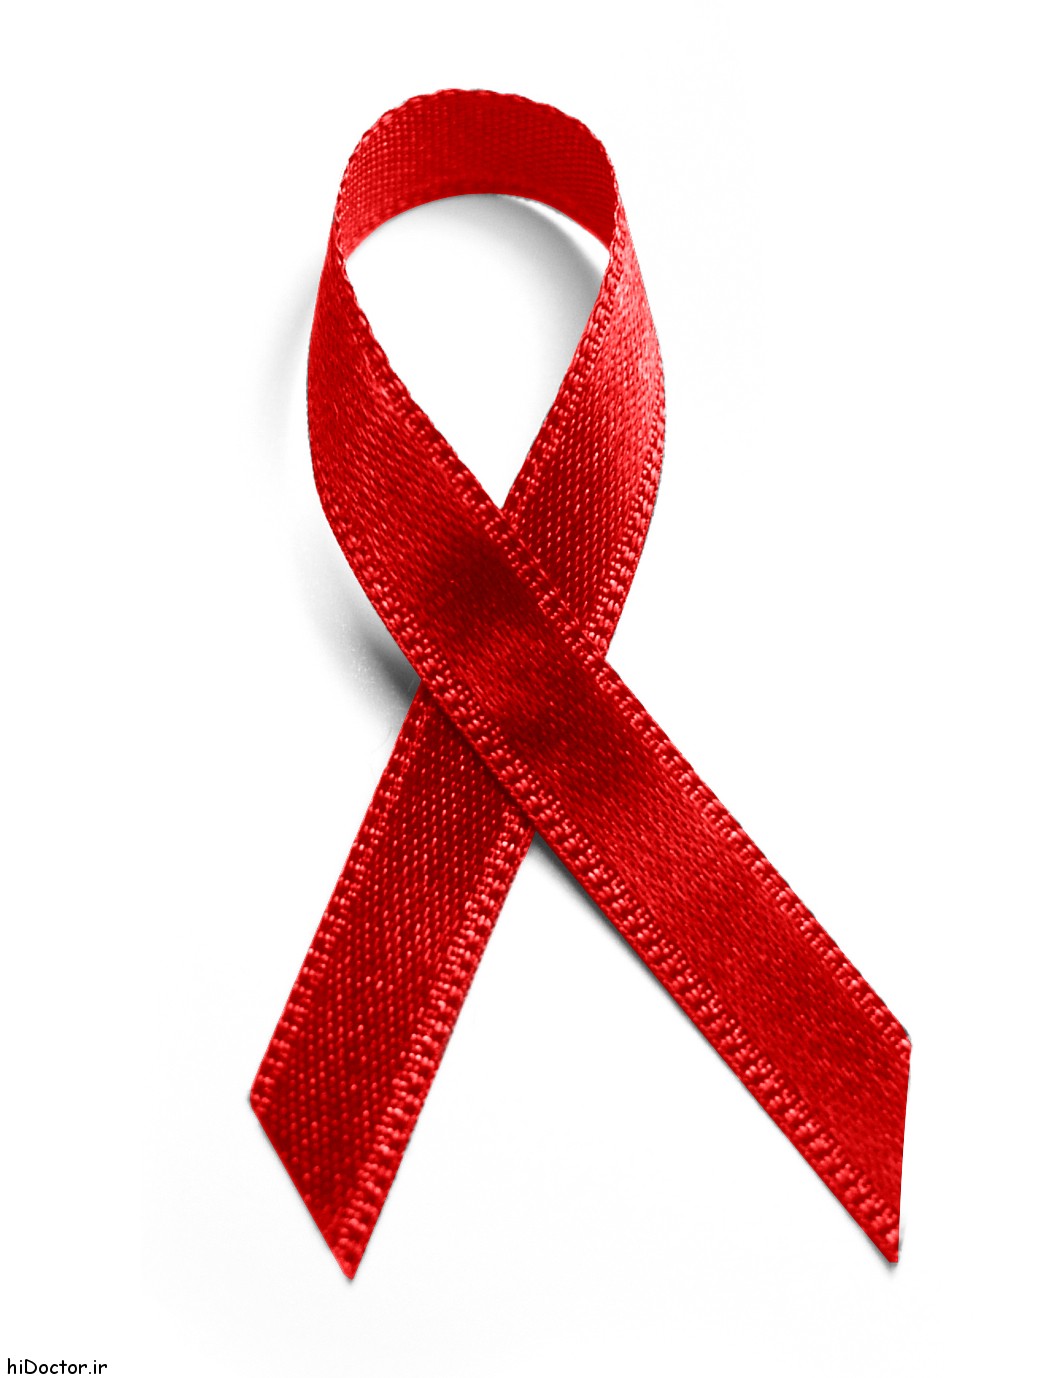 AIDS-HIV-photos (28)